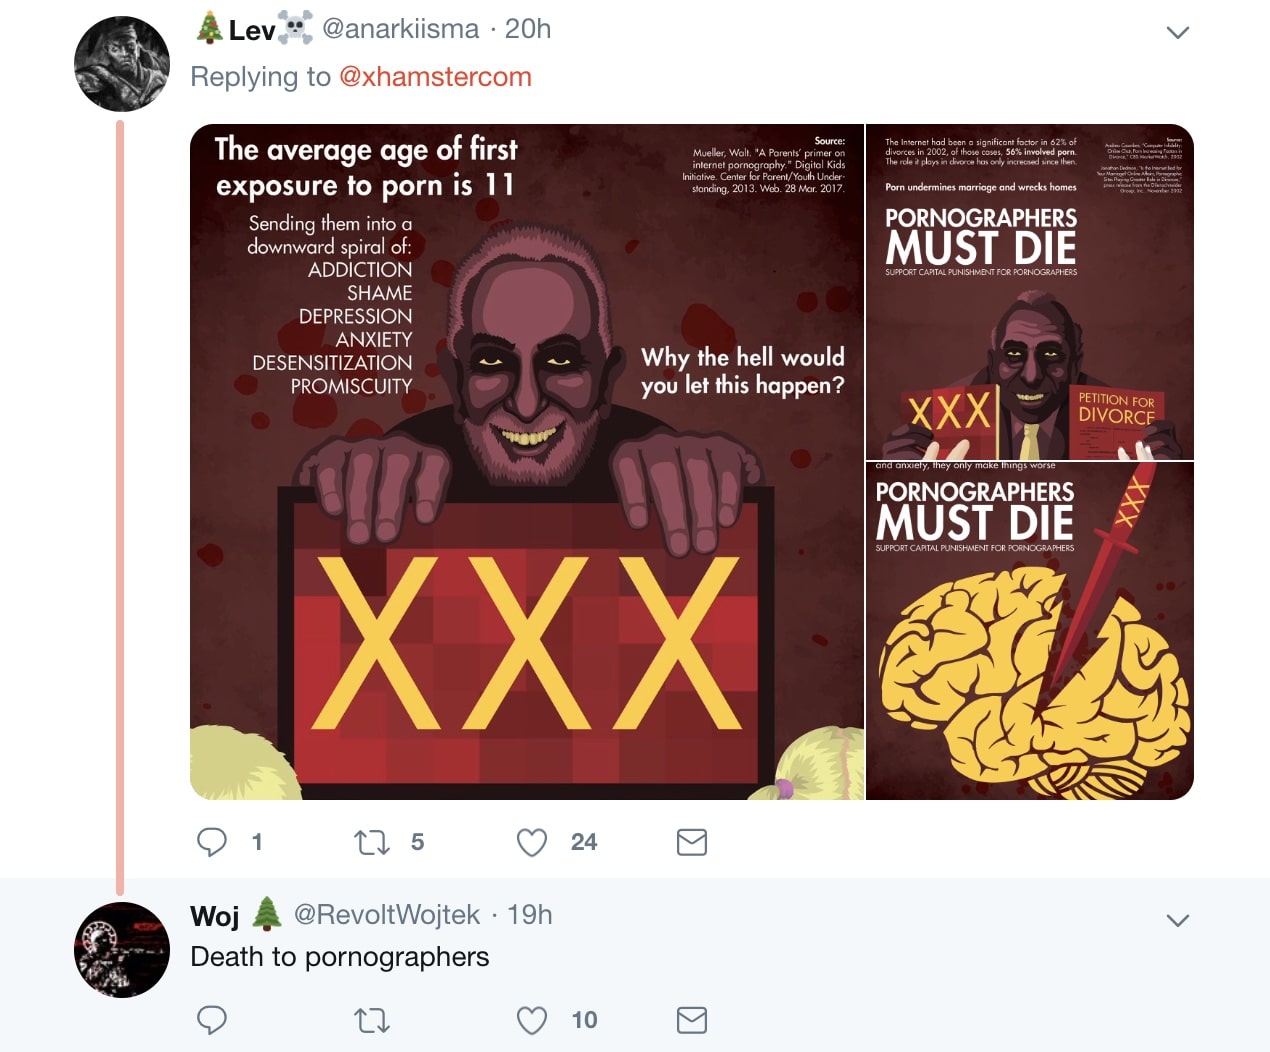 tweet saying "death to pornographers"